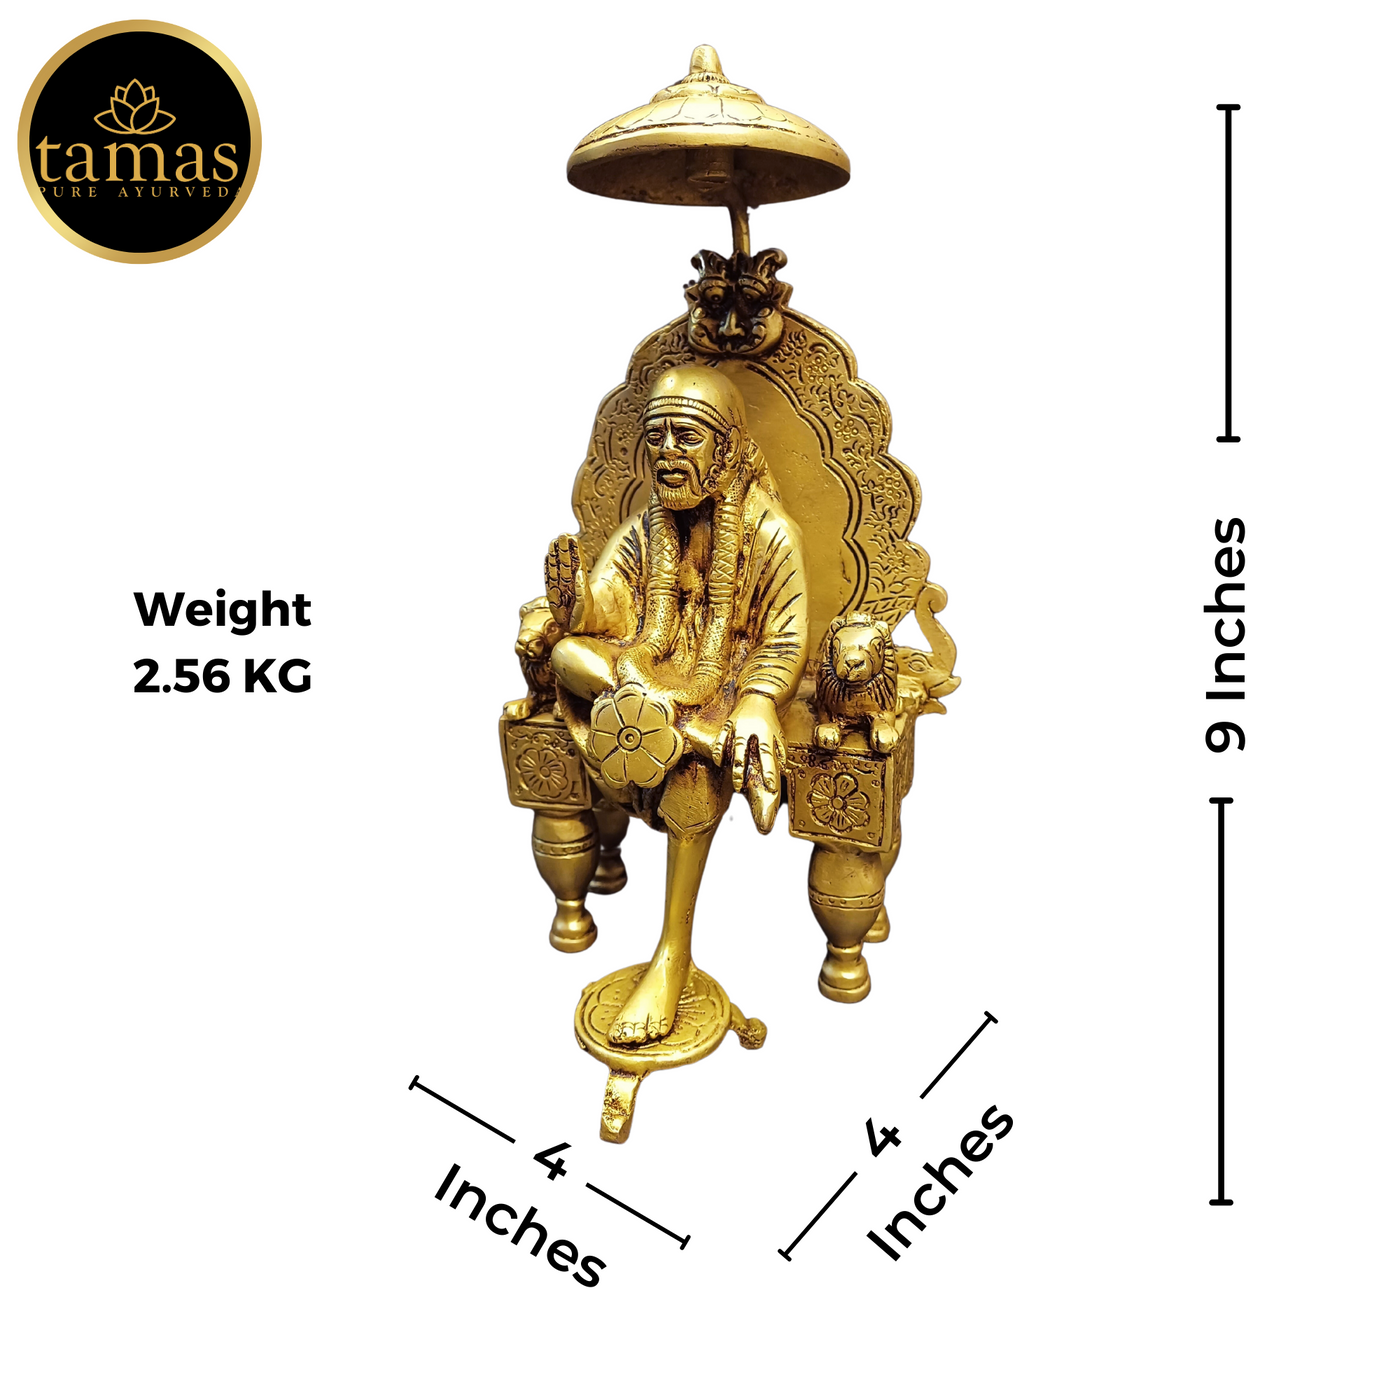 Tamas Brass Sai Baba Statue (9 Inches)